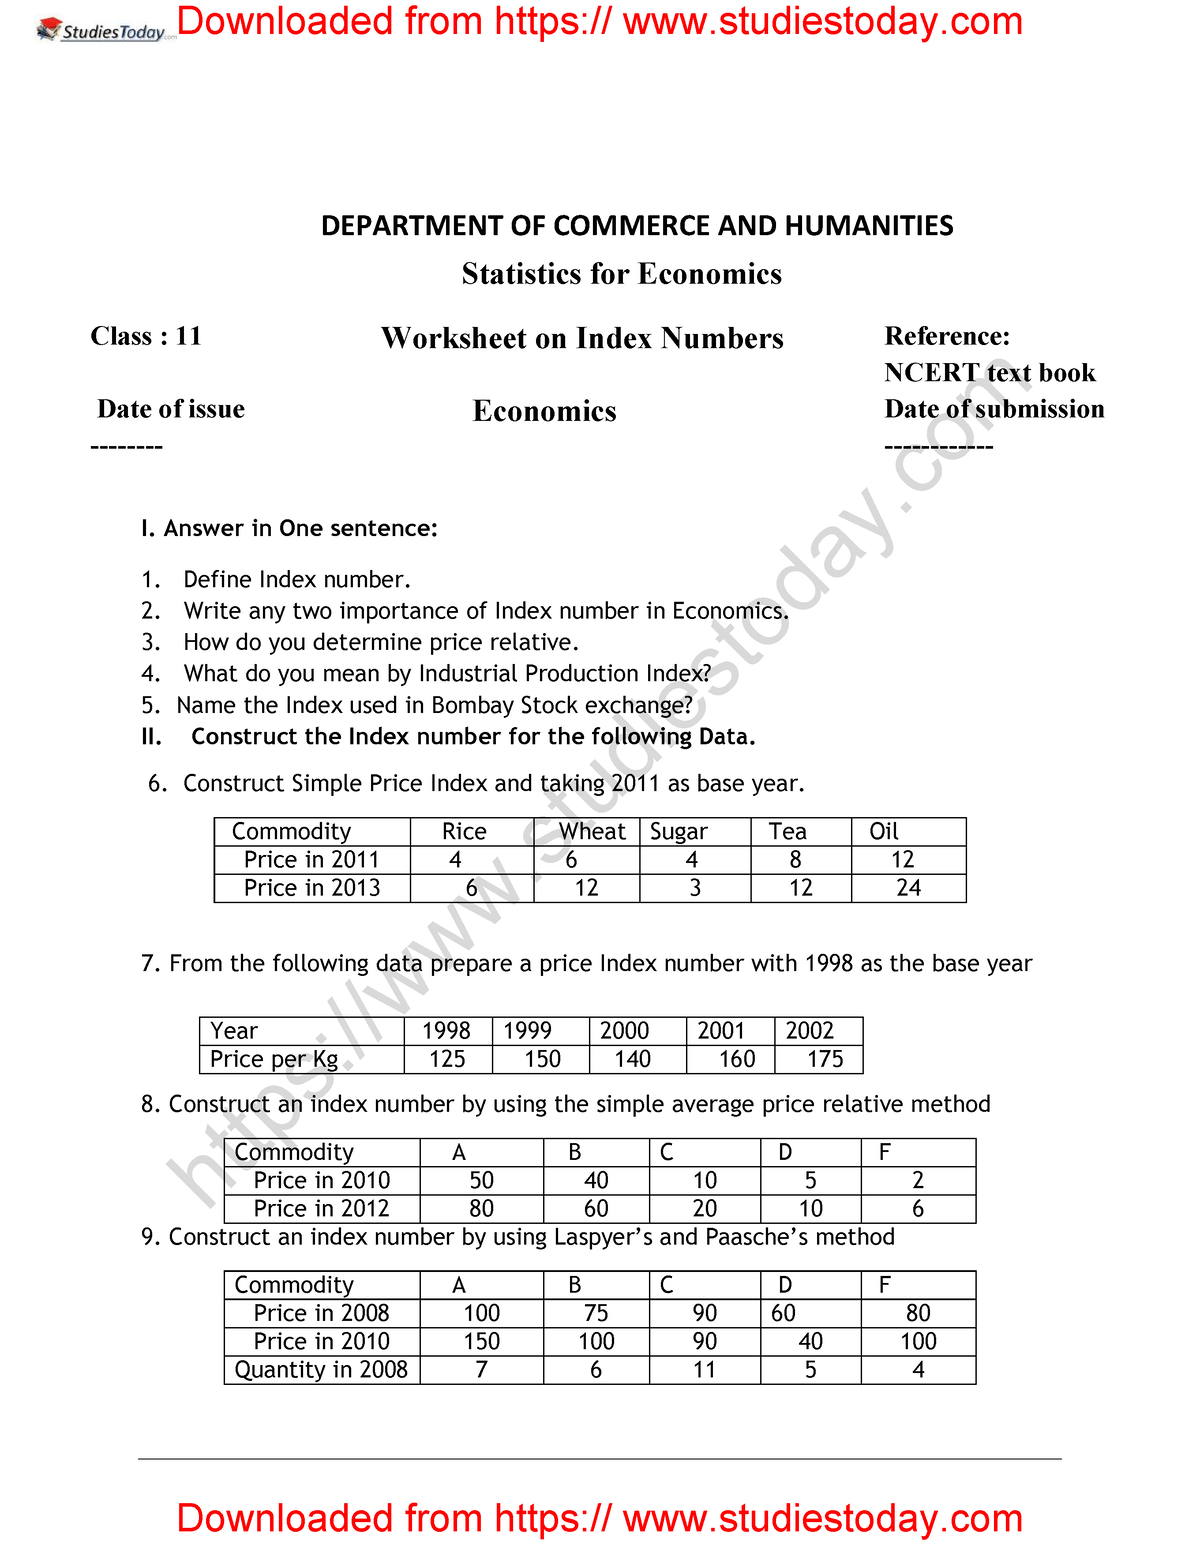 cbse-class-11-economics-index-number-worksheet-department-of-commerce-and-humanities